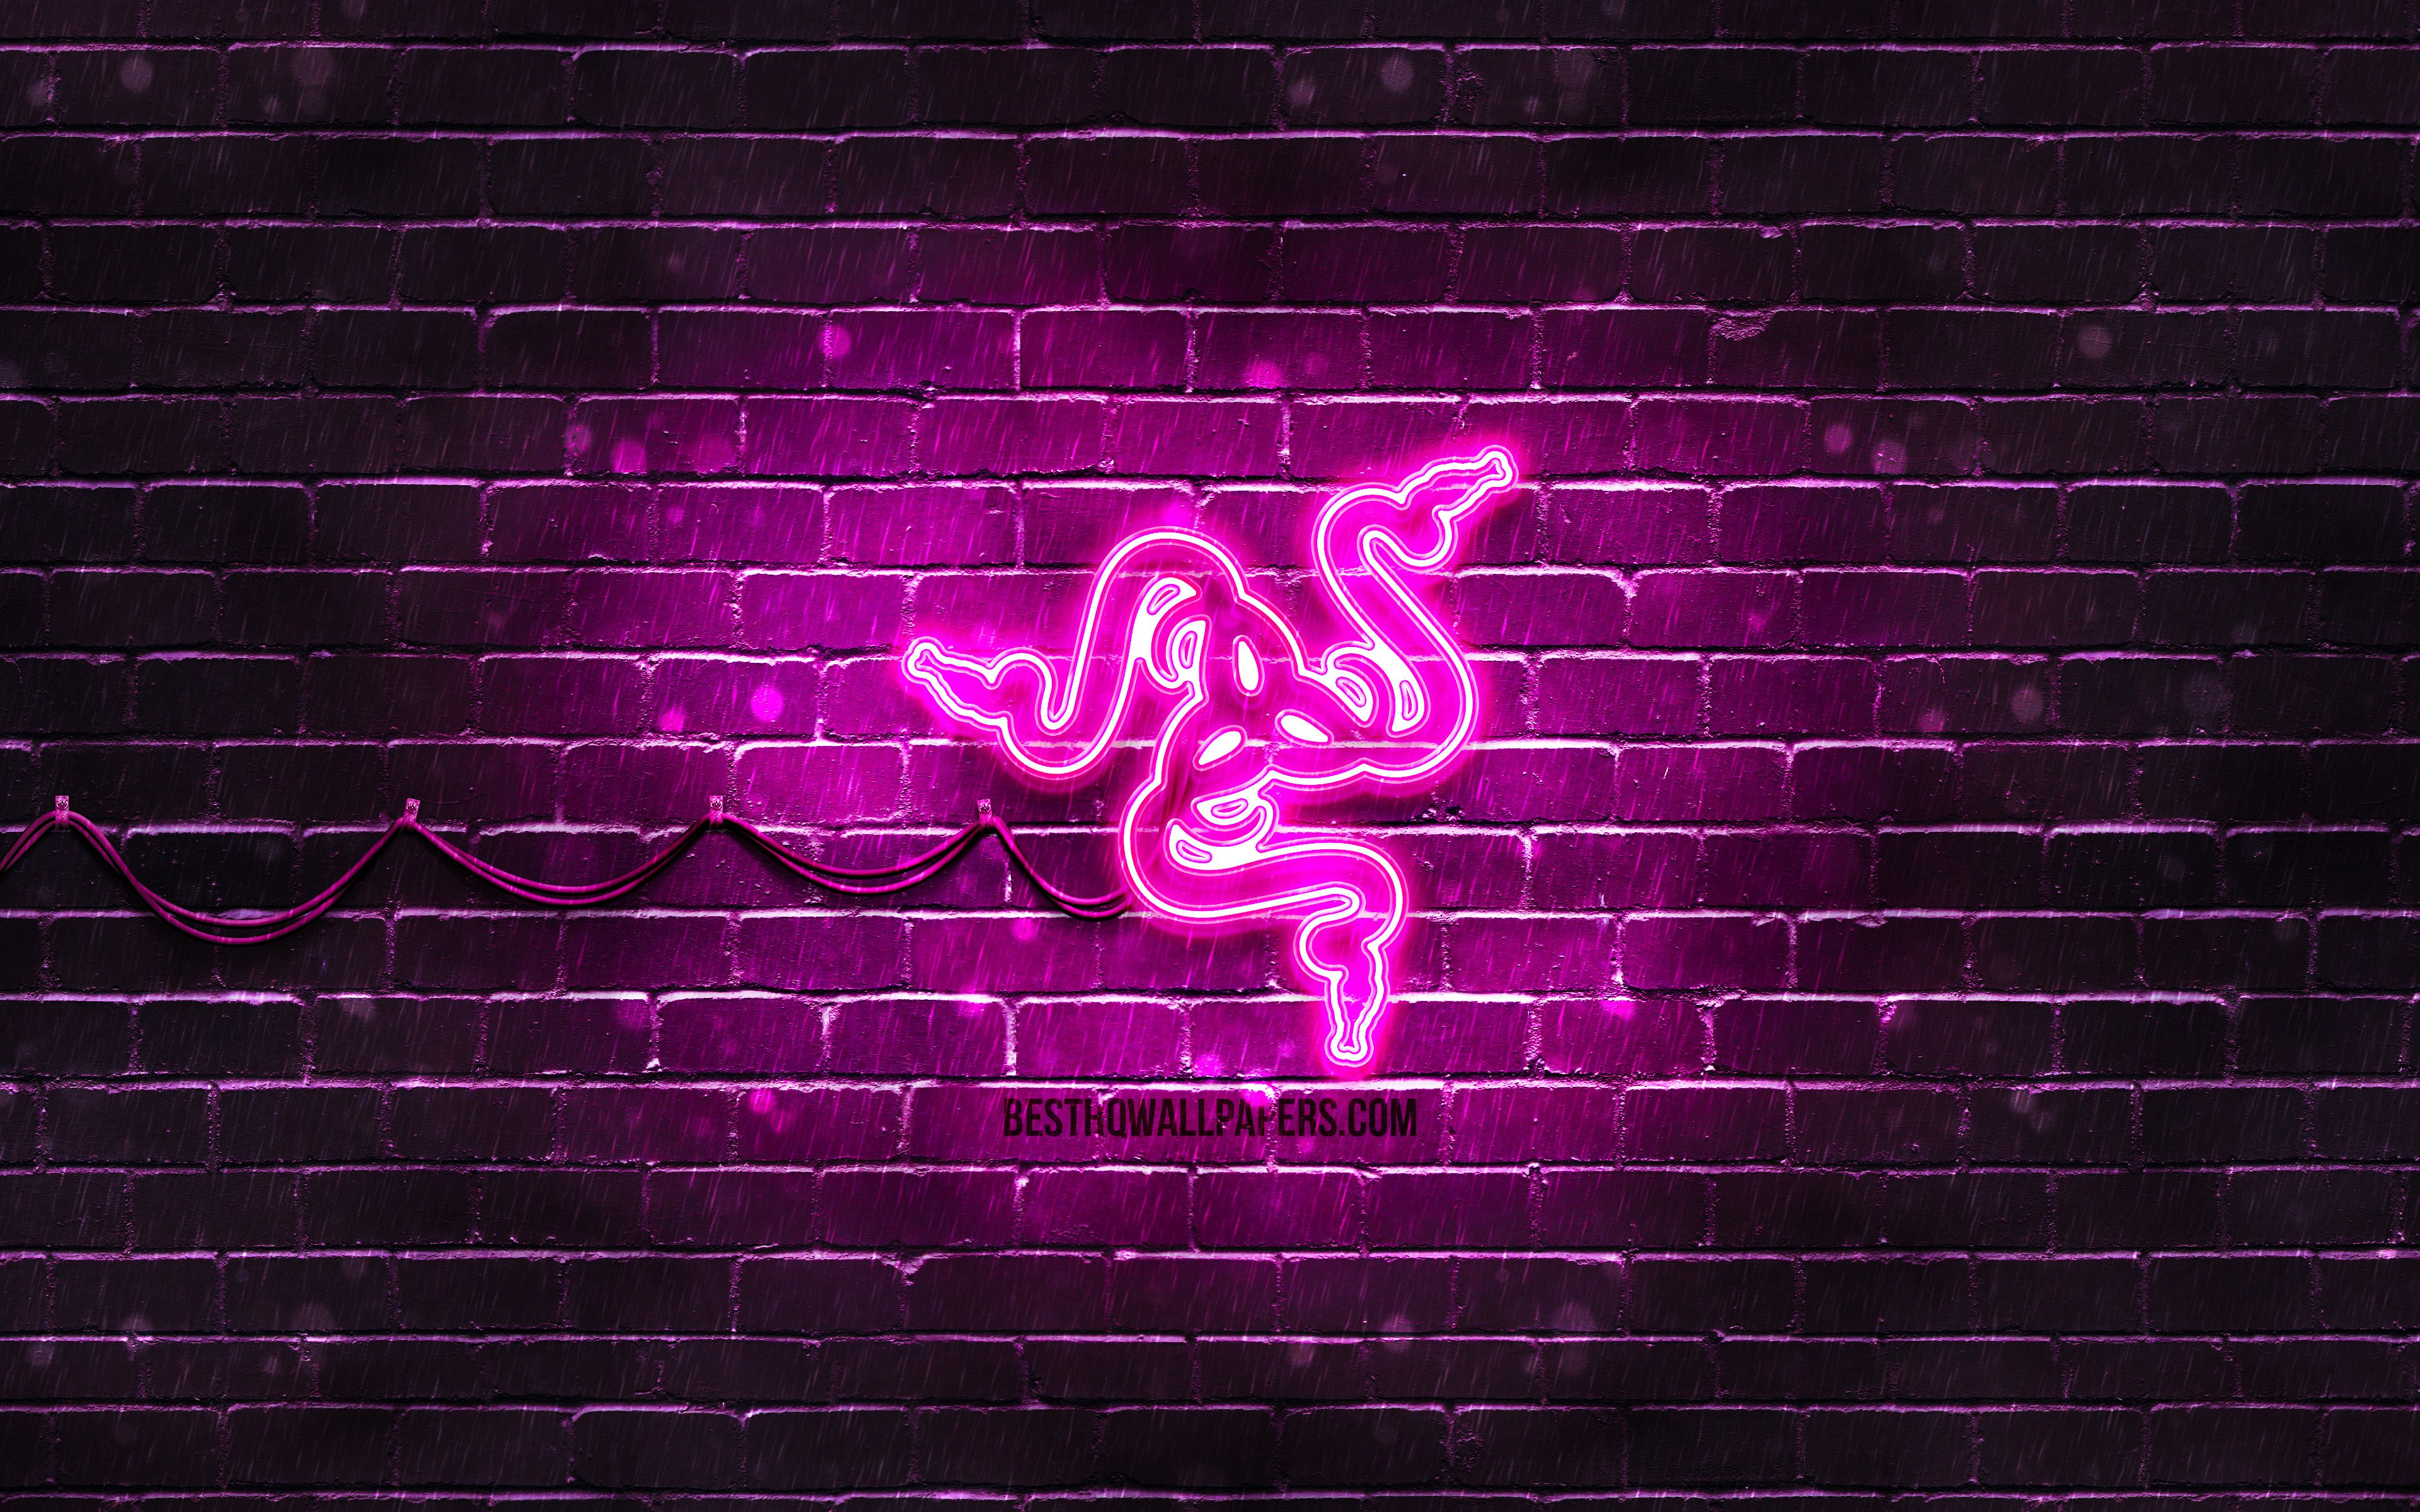 Download imagens Logotipo Roblox roxo, 4k, parede de tijolos roxa